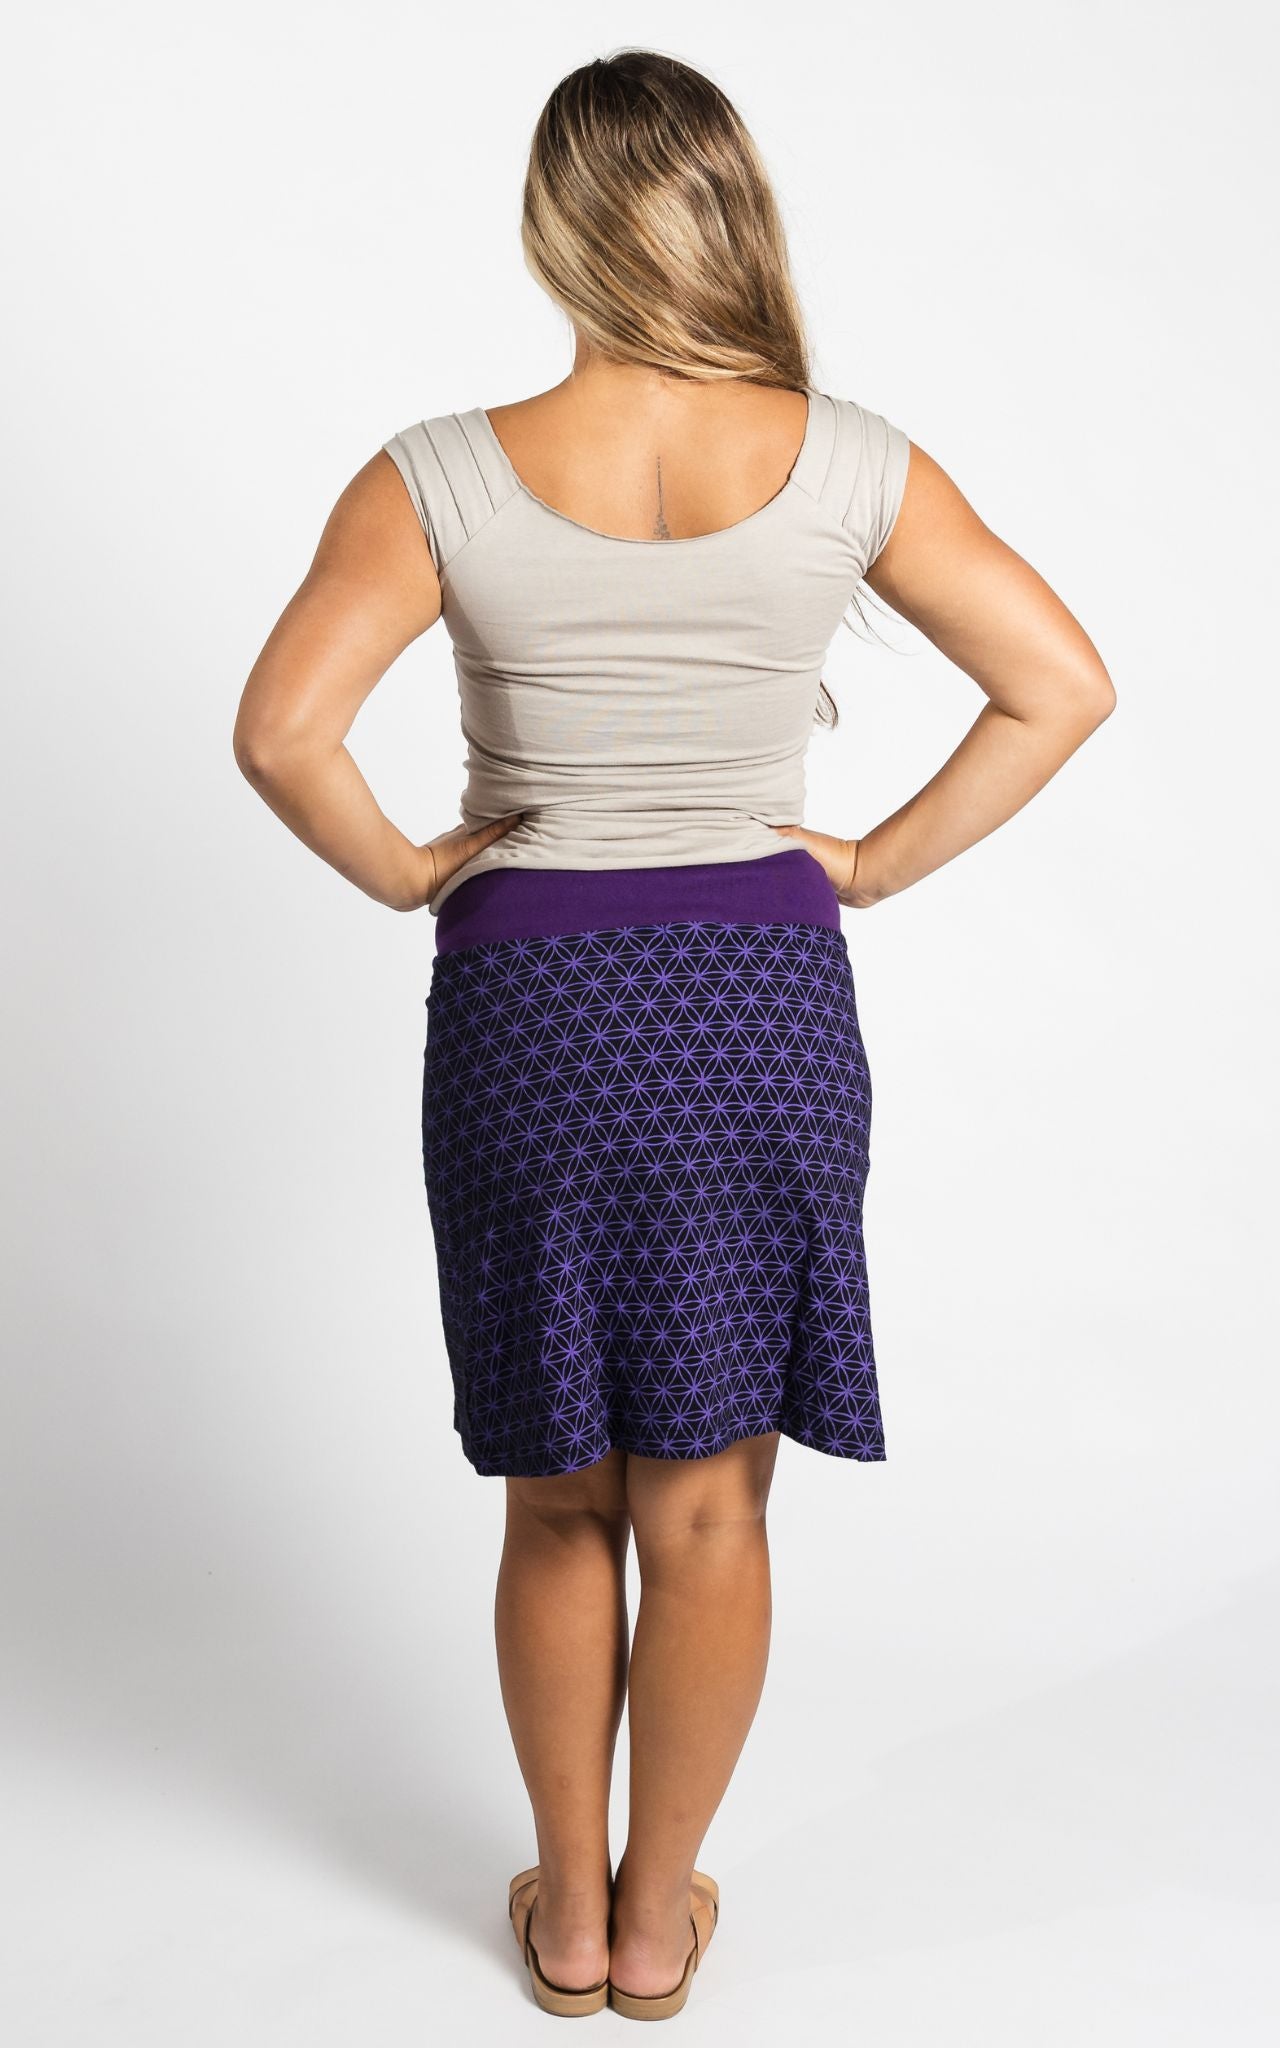 Surya Australia Ethical Cotton 'Anita' Skirt made in Nepal - Purple